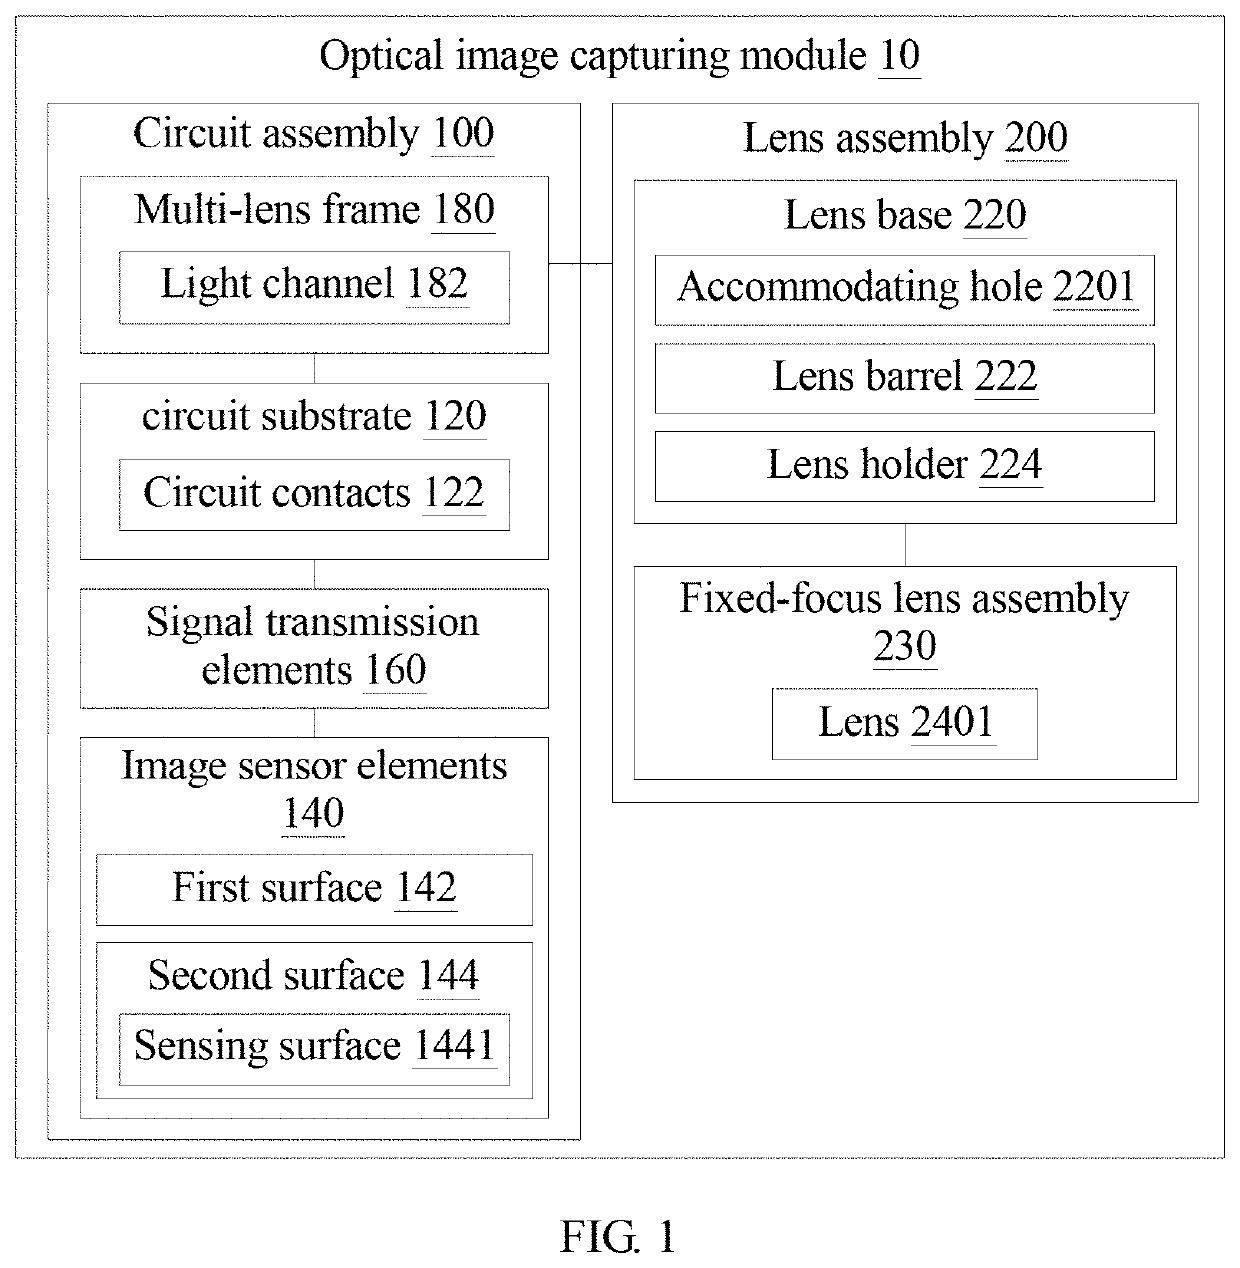 Optical image capturing module